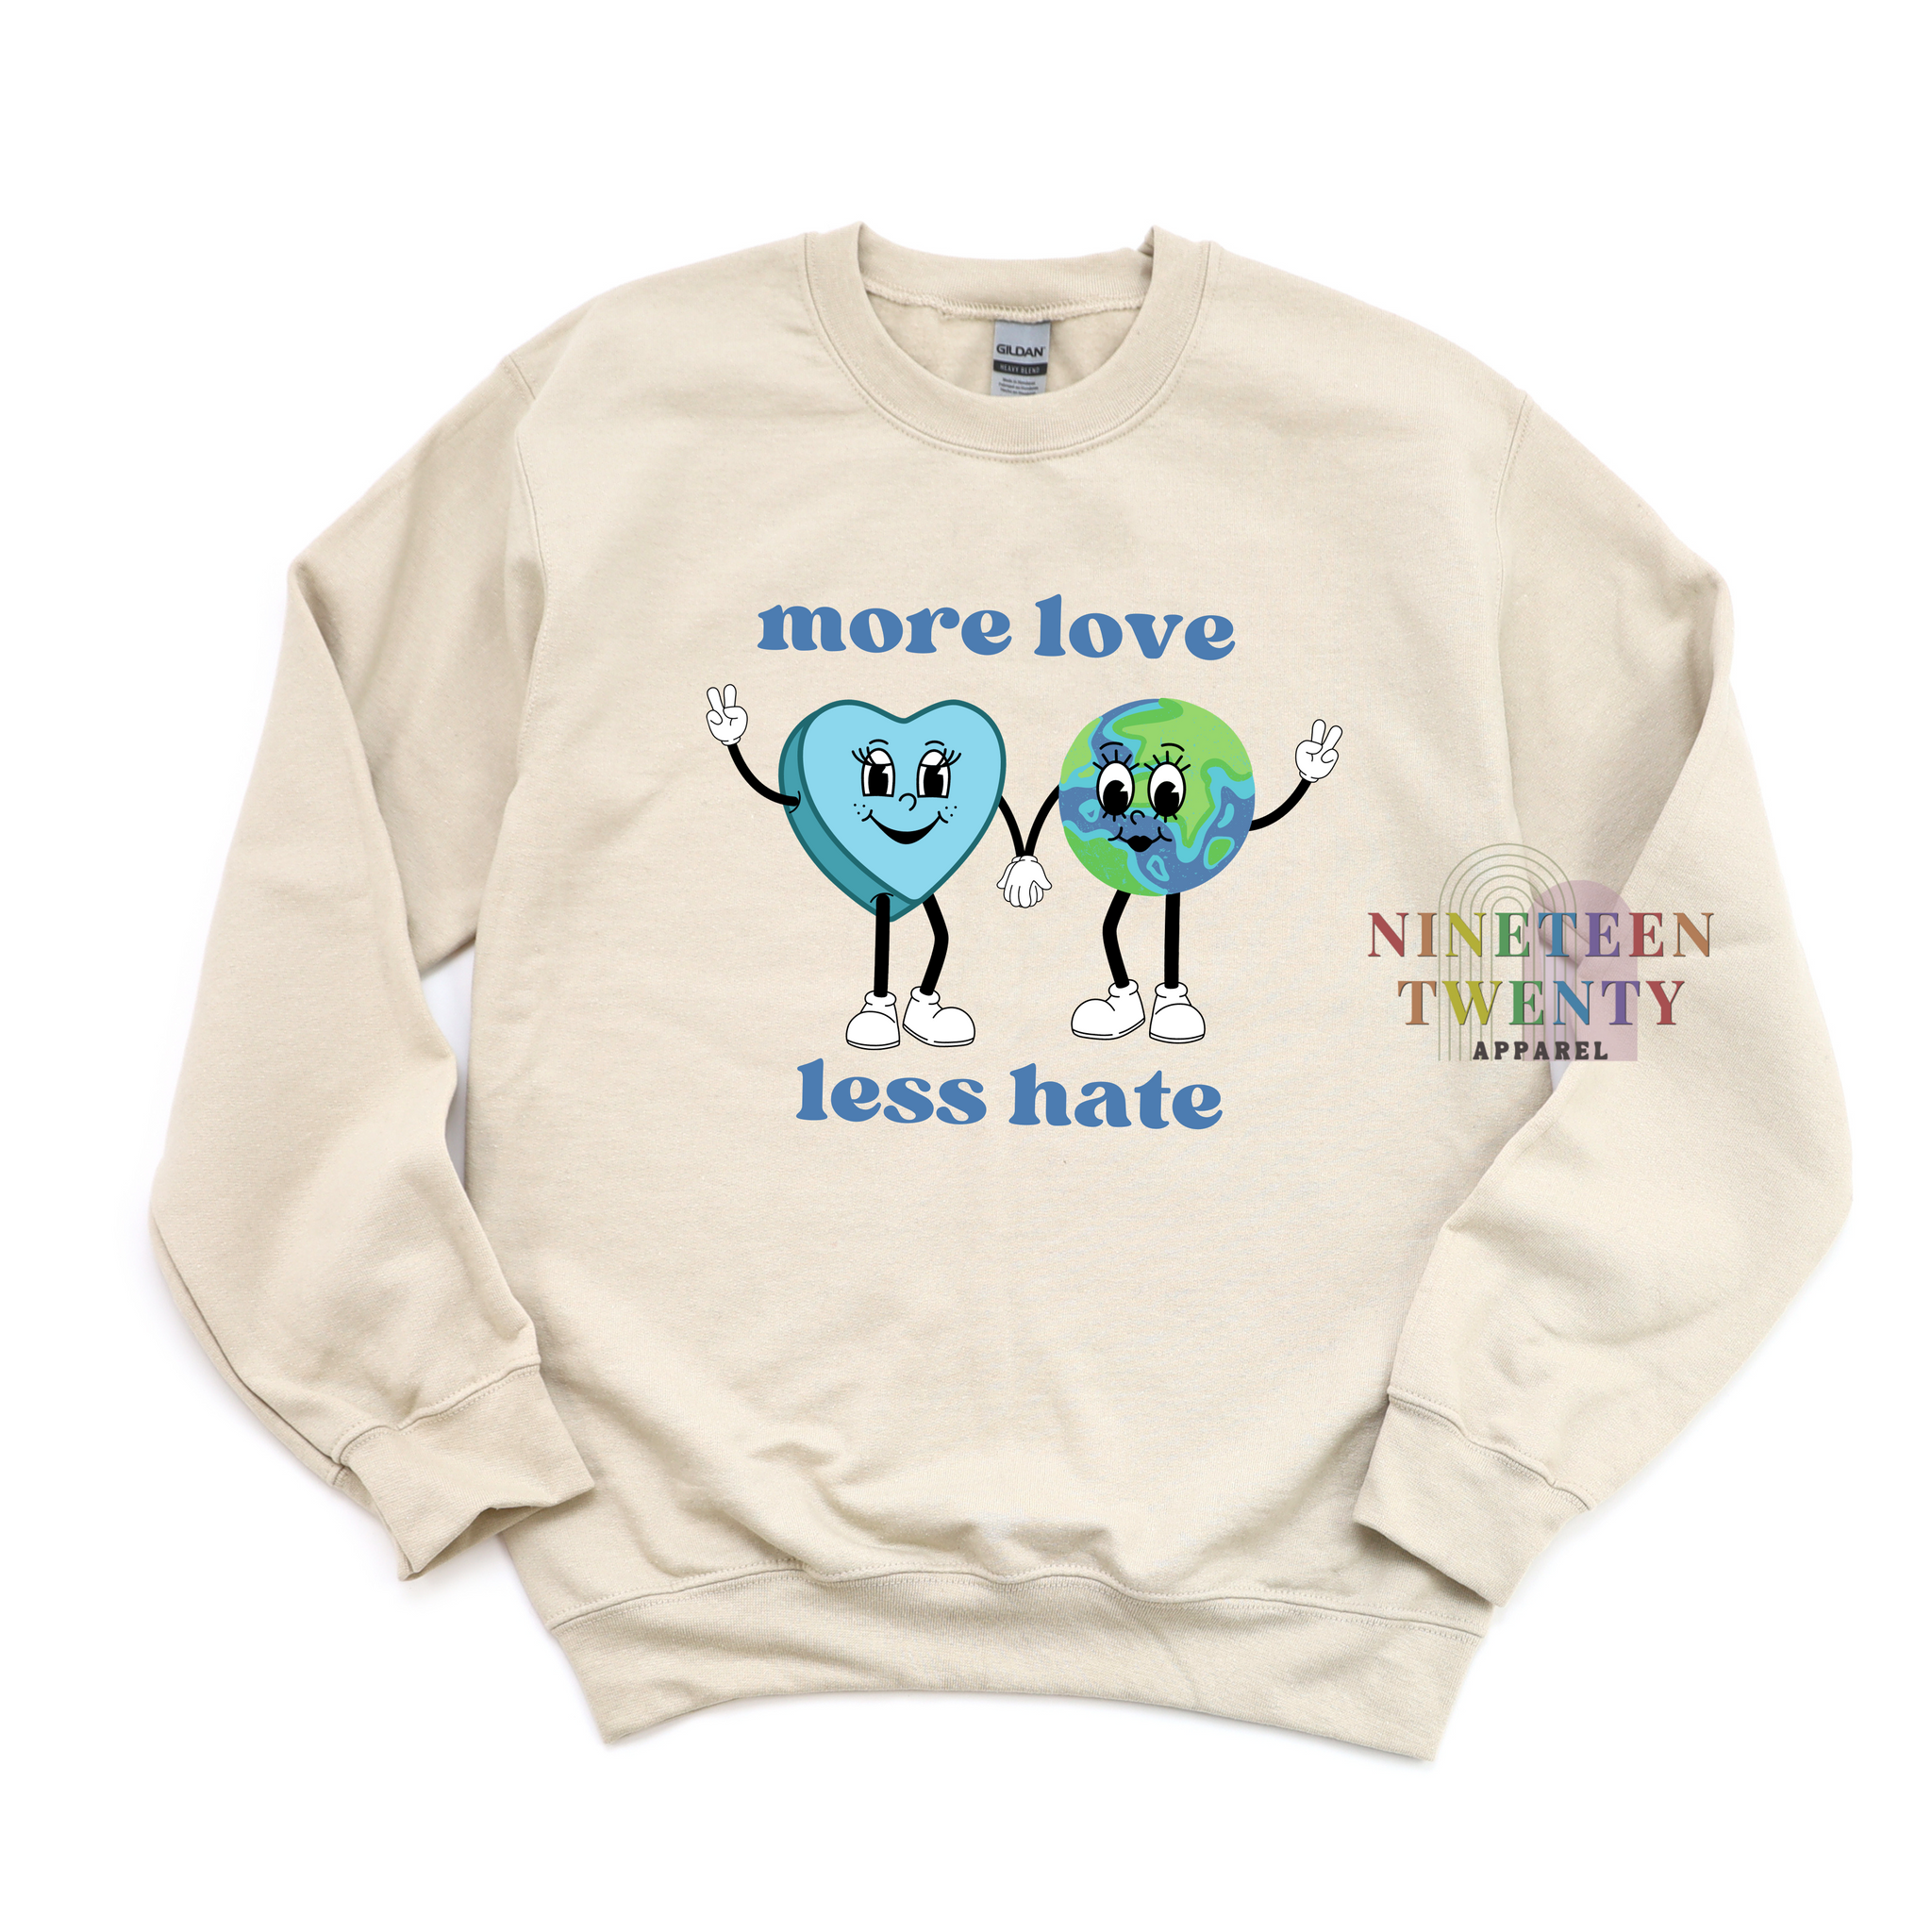 More Love Less Hate Adult Tee And Sweatshirt – Nineteen Twenty Apparel